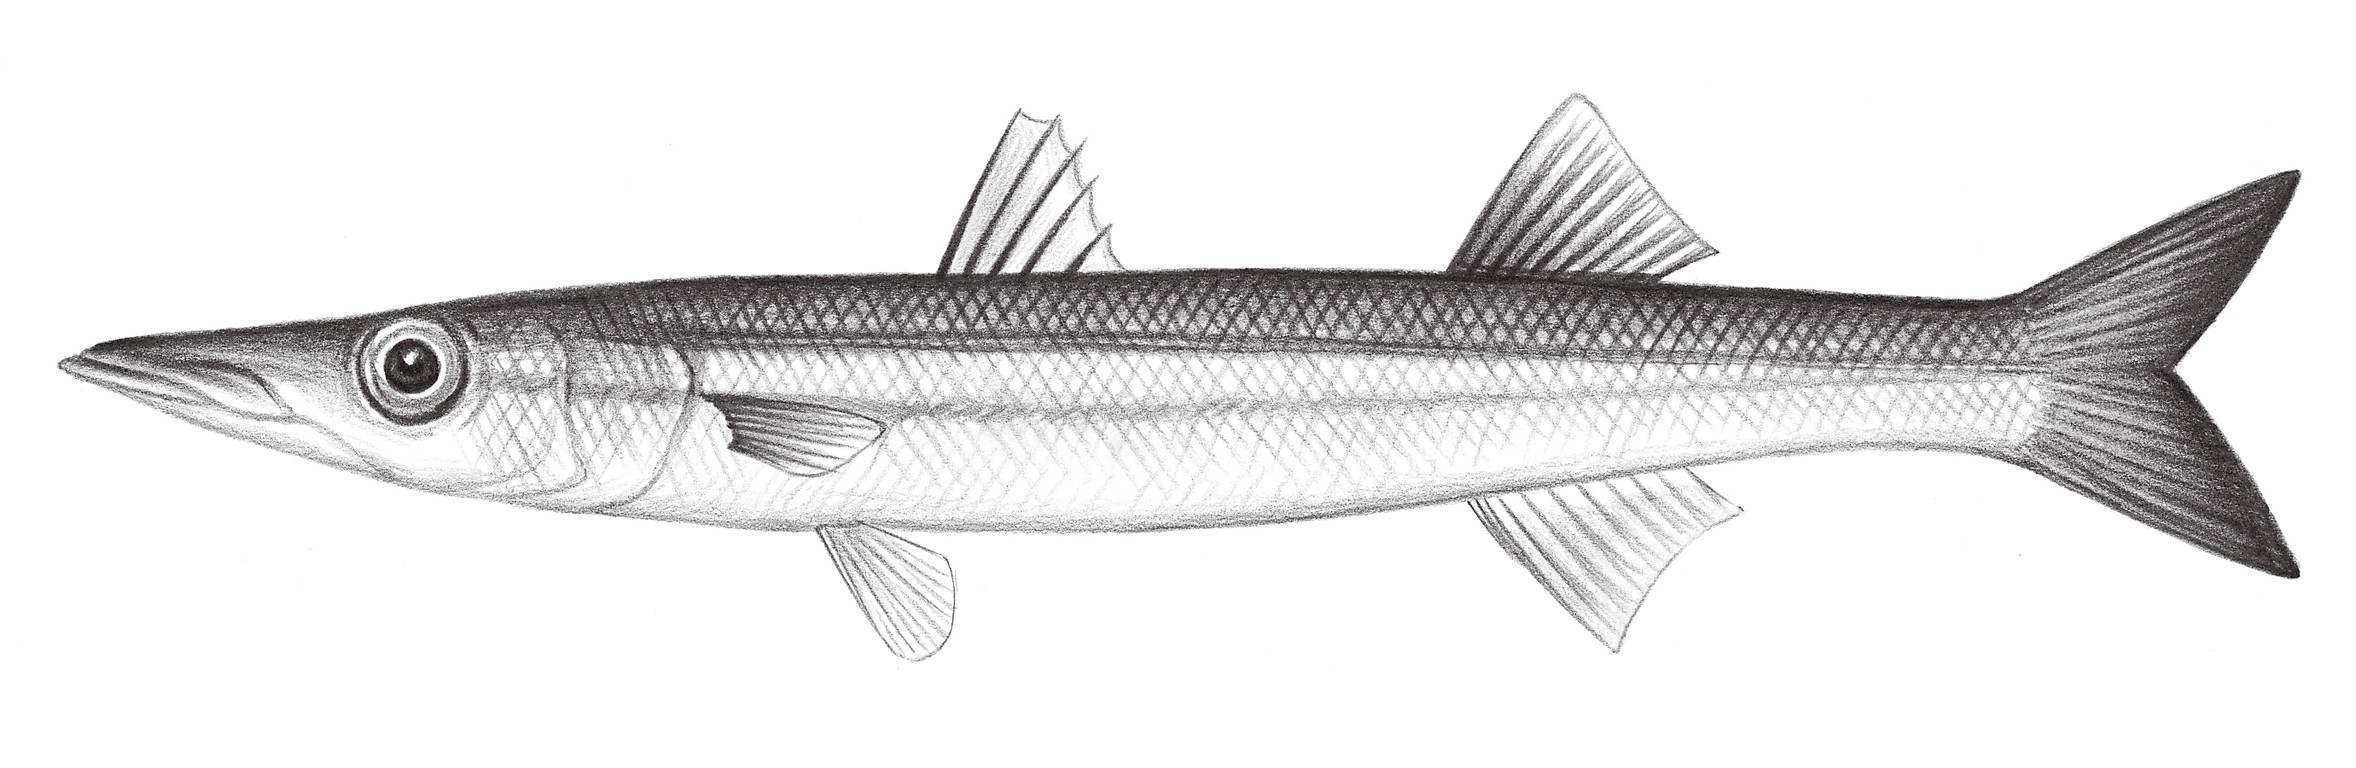 2322.	黃尾金梭魚 Sphyraena flavicauda Rüppell, 1835